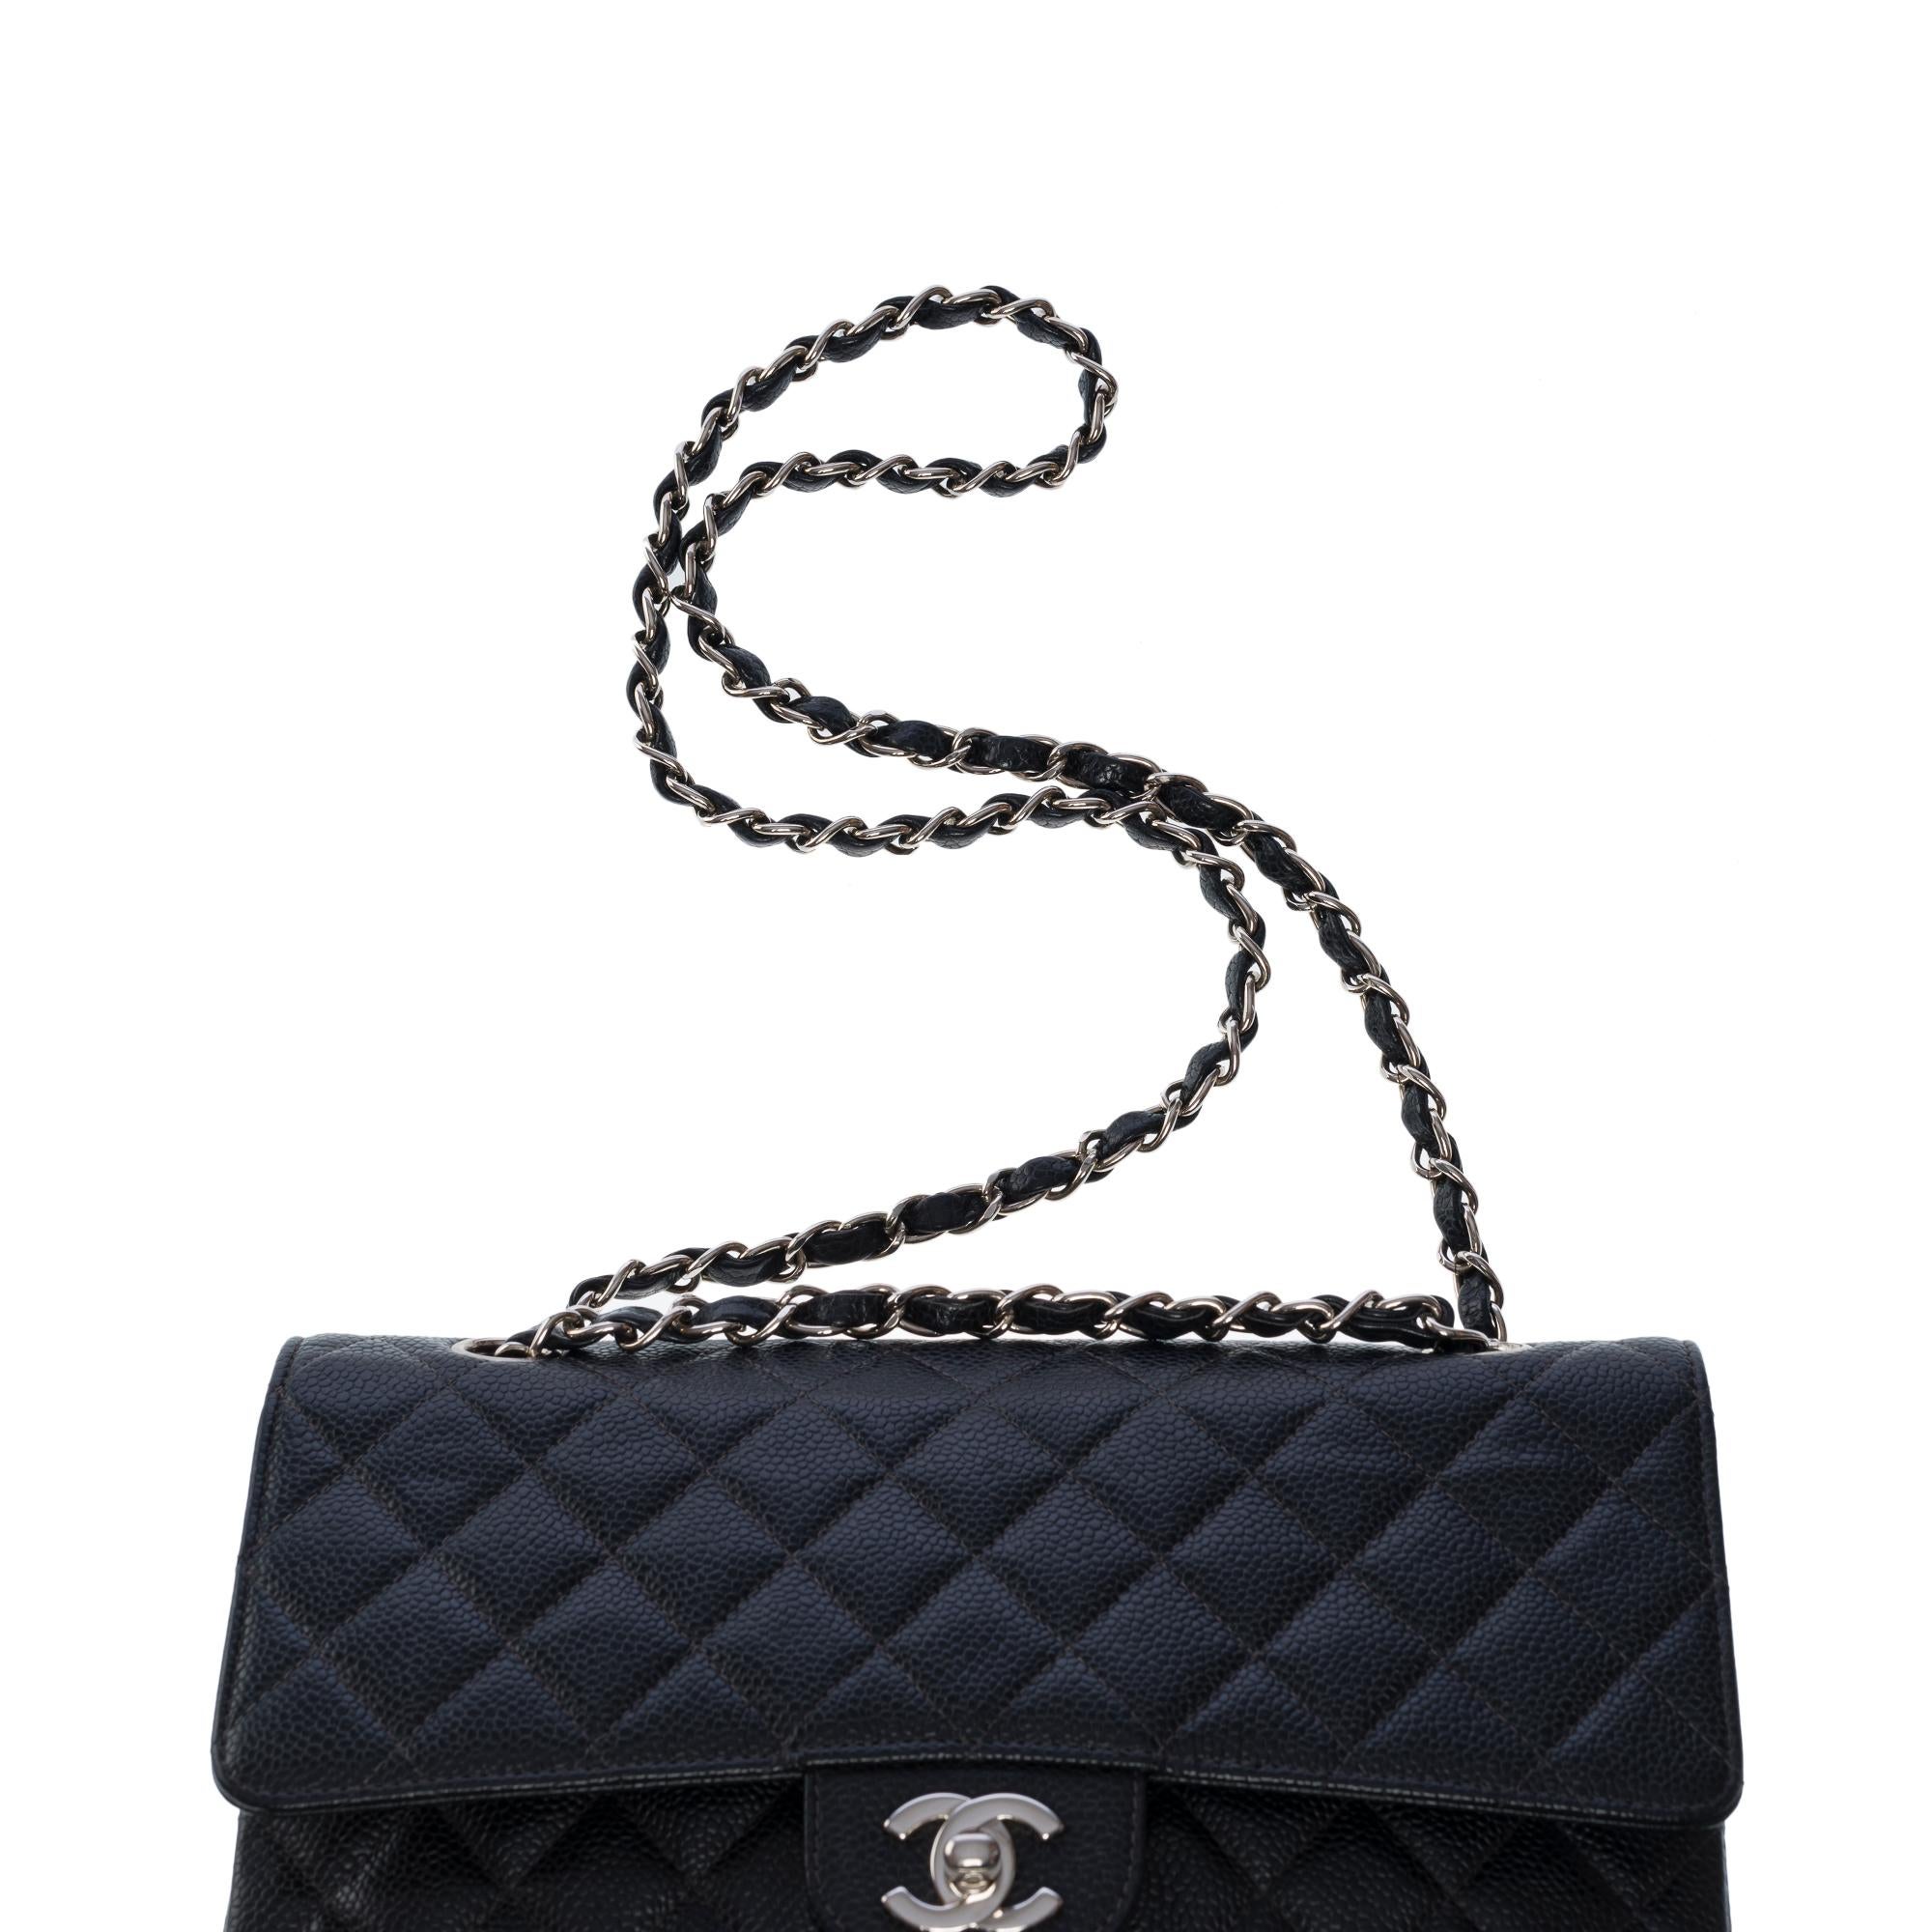 Chanel Timeless Medium 25cm double flap shoulder bag in black caviar leather, SHW 2